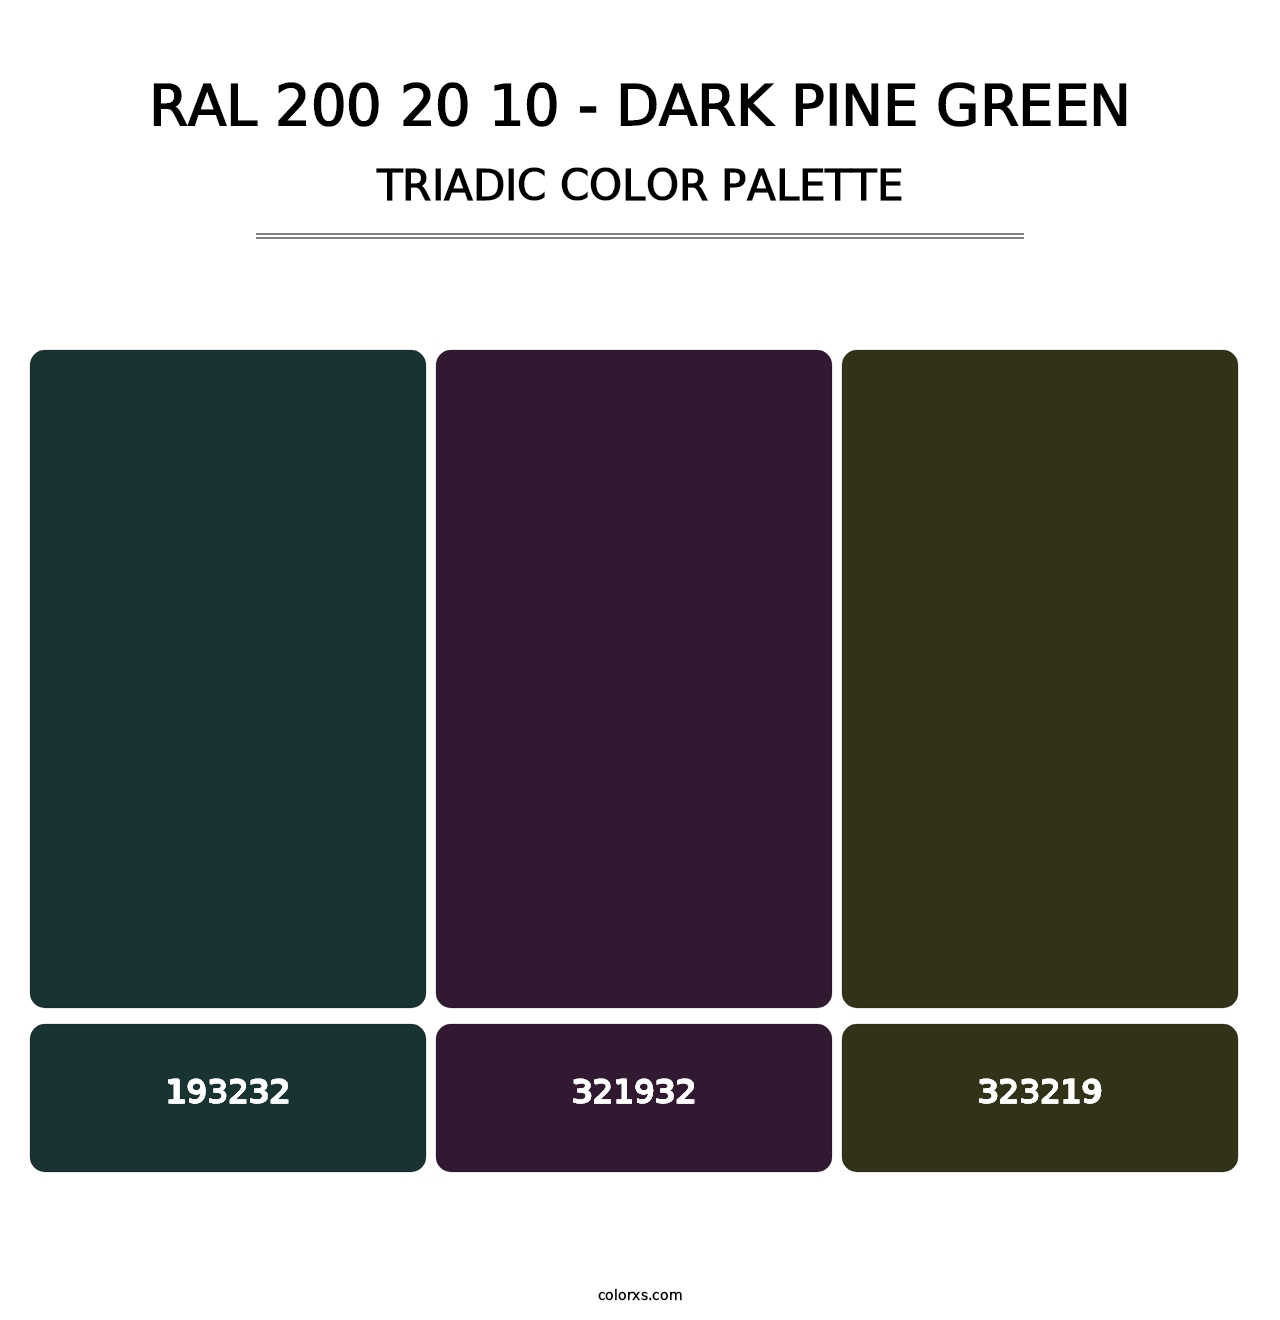 RAL 200 20 10 - Dark Pine Green - Triadic Color Palette